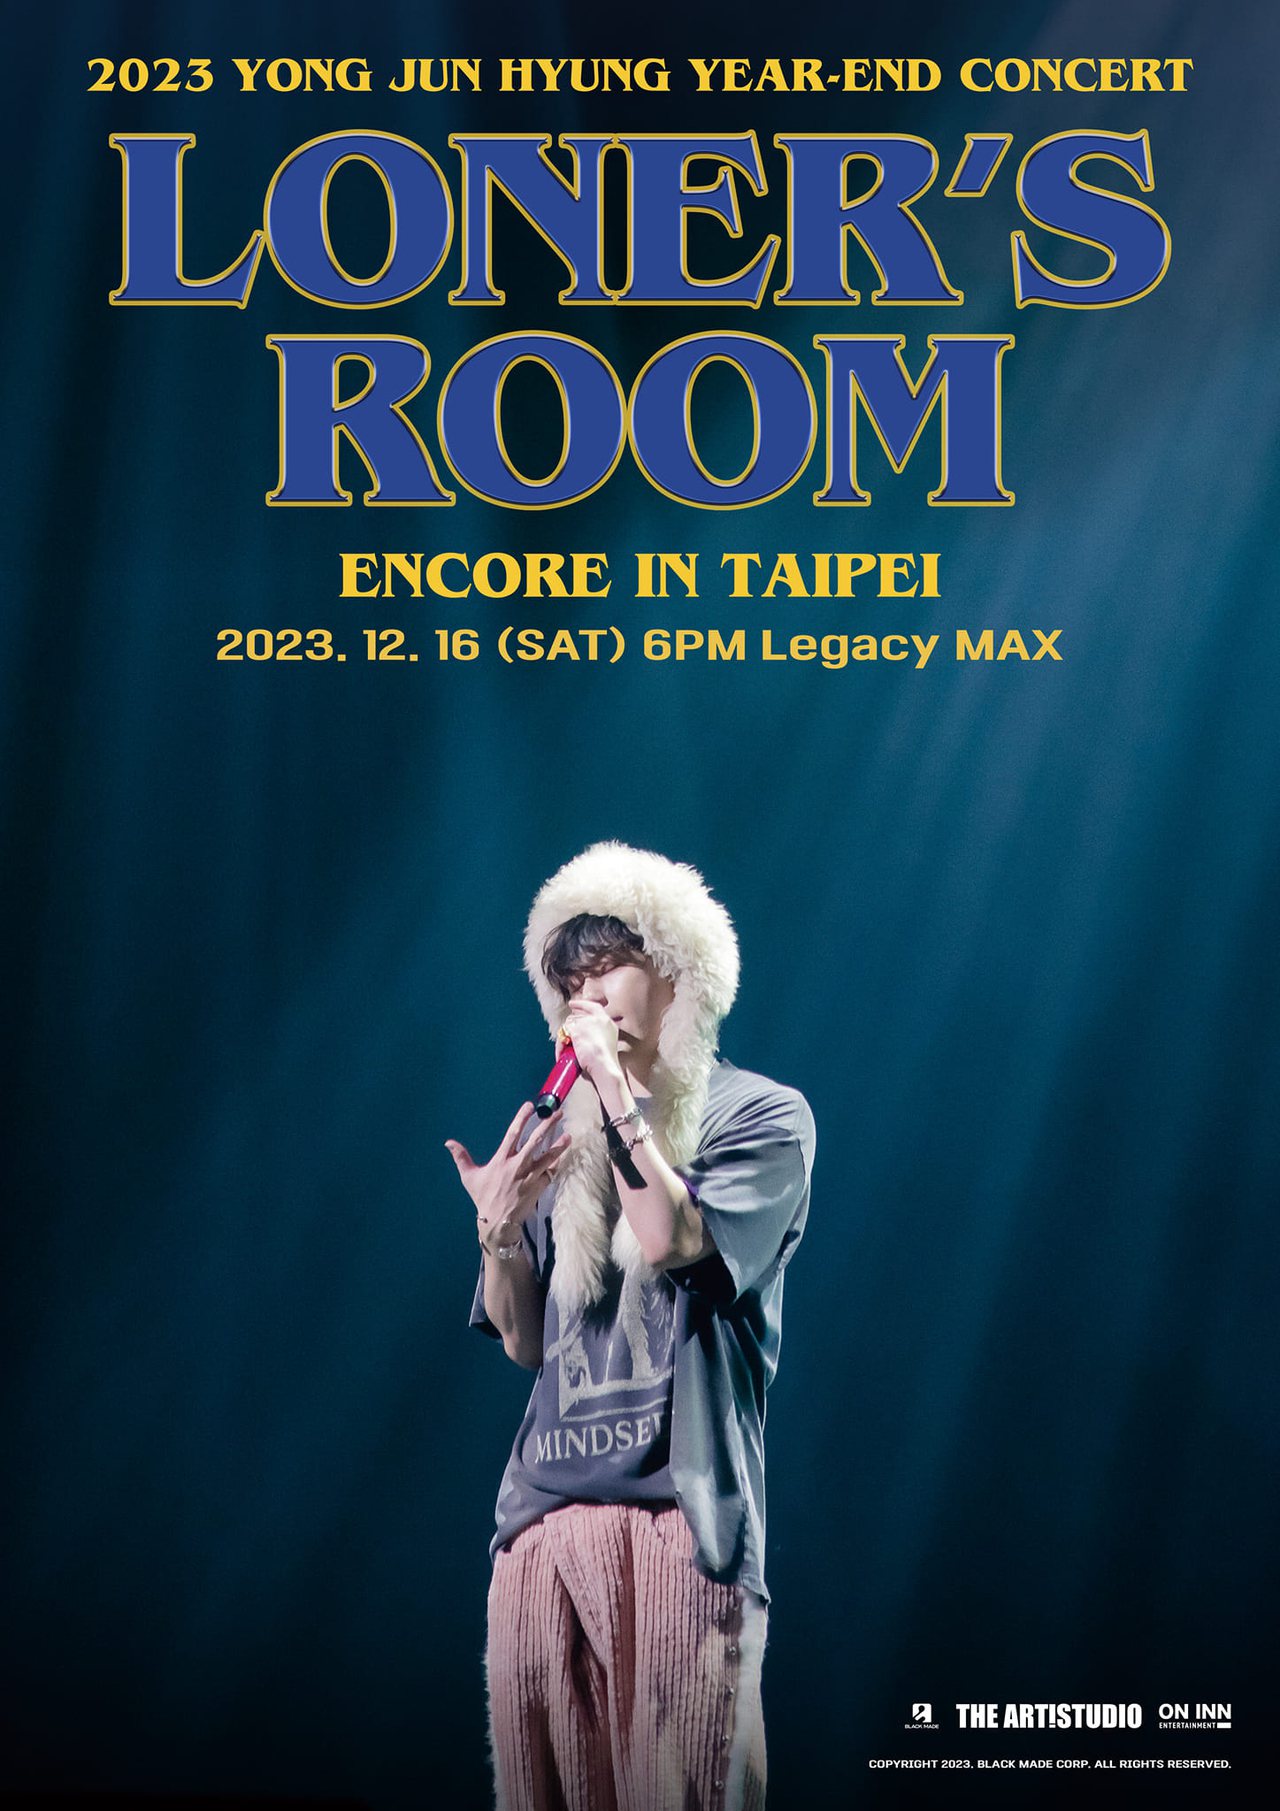 韓國歌手龍俊亨於12月16日舉辦「2023 YONG JUN HYUNG FAN CONCERT [LONER's ROOM] ENCORE IN TAIPEI」。圖／TheArtistudio得藝室策劃提供